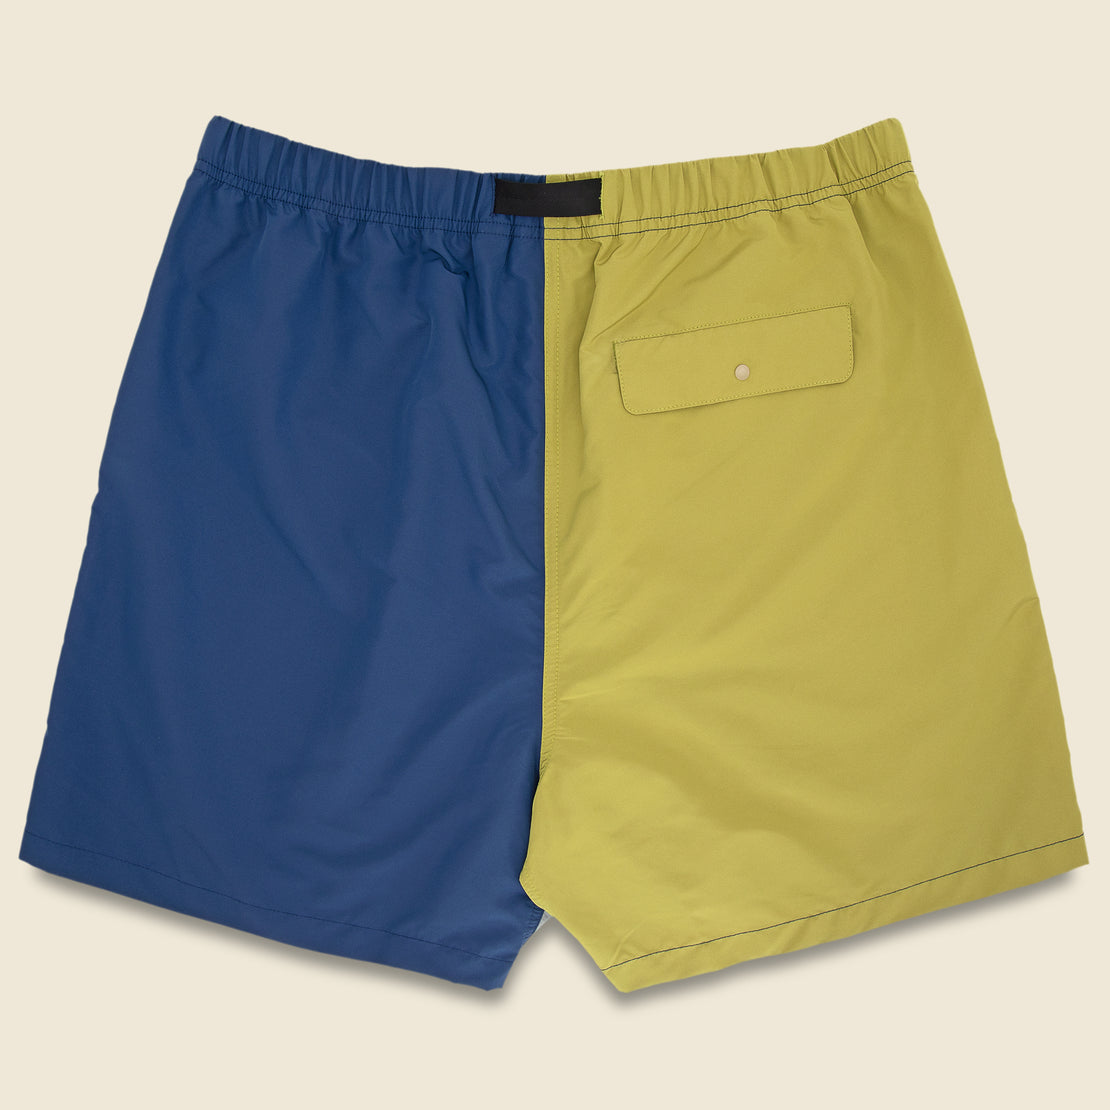 Shell Canyon Shorts - Crazy Citron - Gramicci - STAG Provisions - Shorts - Lounge